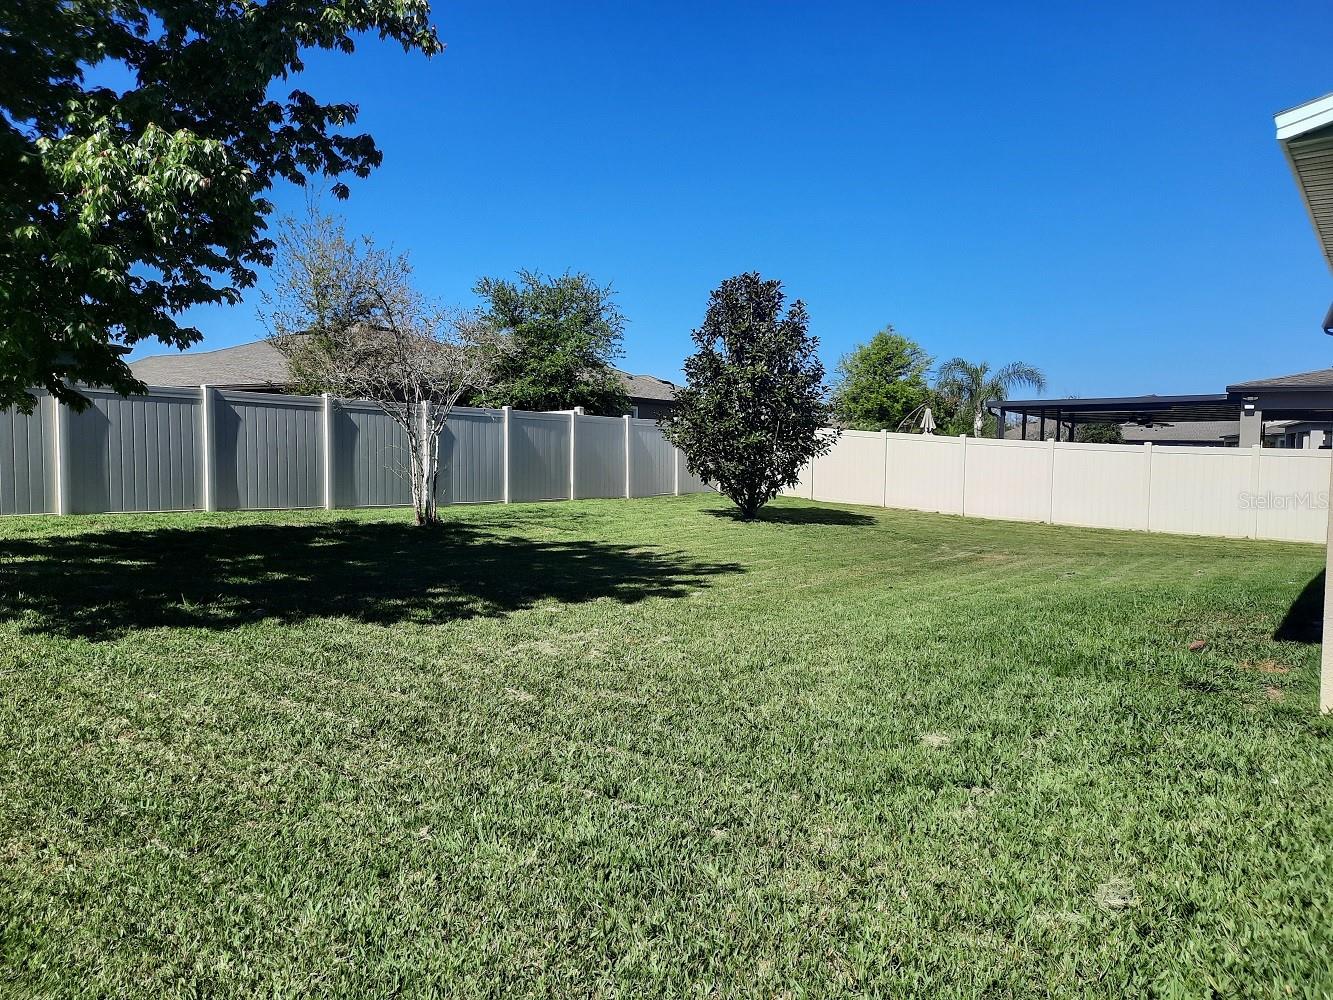 6' Vinyl Fence Surrounds Large Backyard